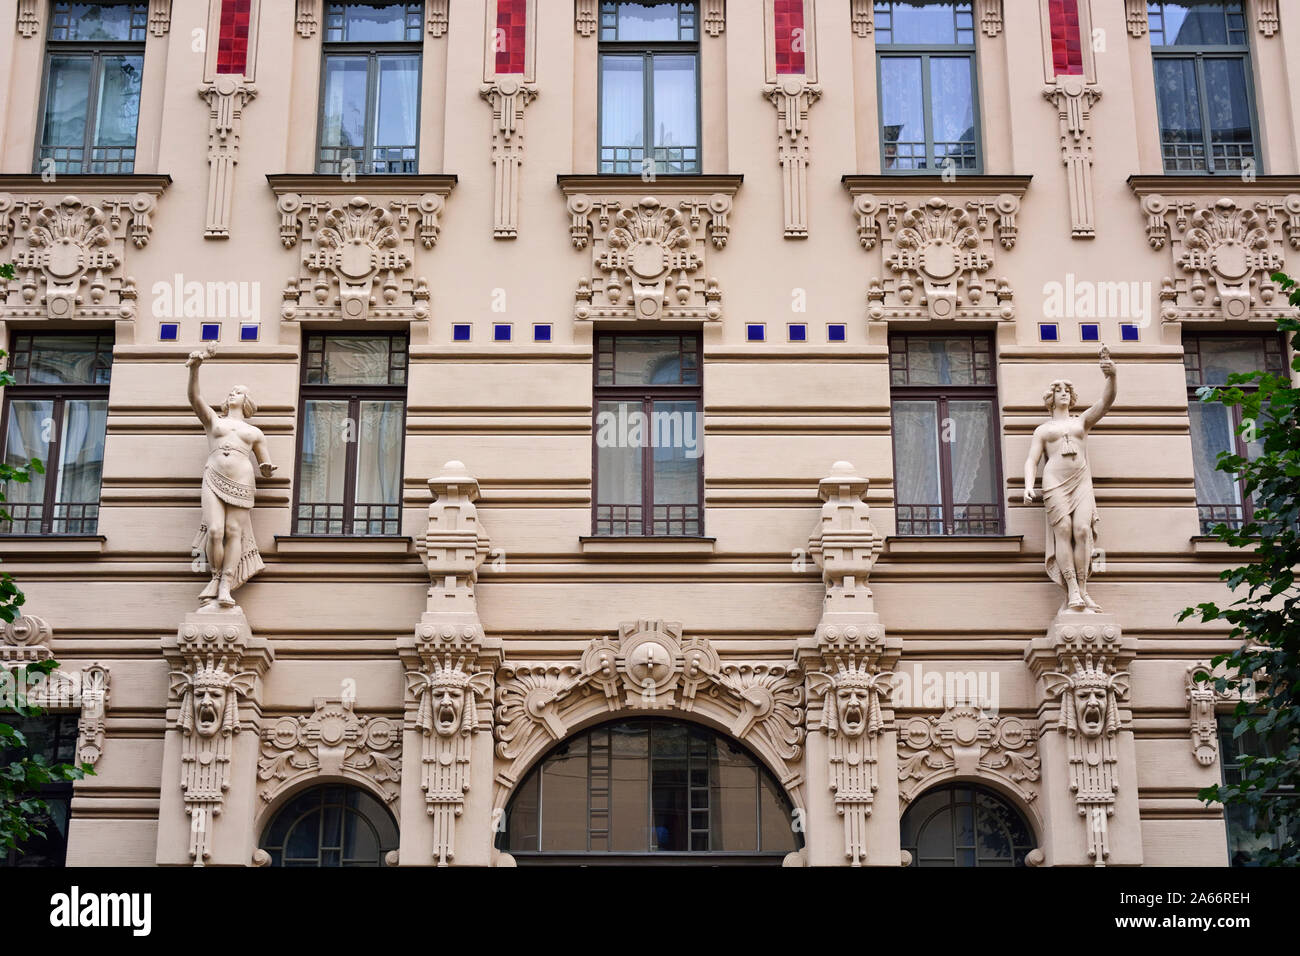 Arquitectura Art Nouveau (Jugendstil arquitectura). Un sitio de Patrimonio Mundial de la Unesco. Riga, Letonia Foto de stock